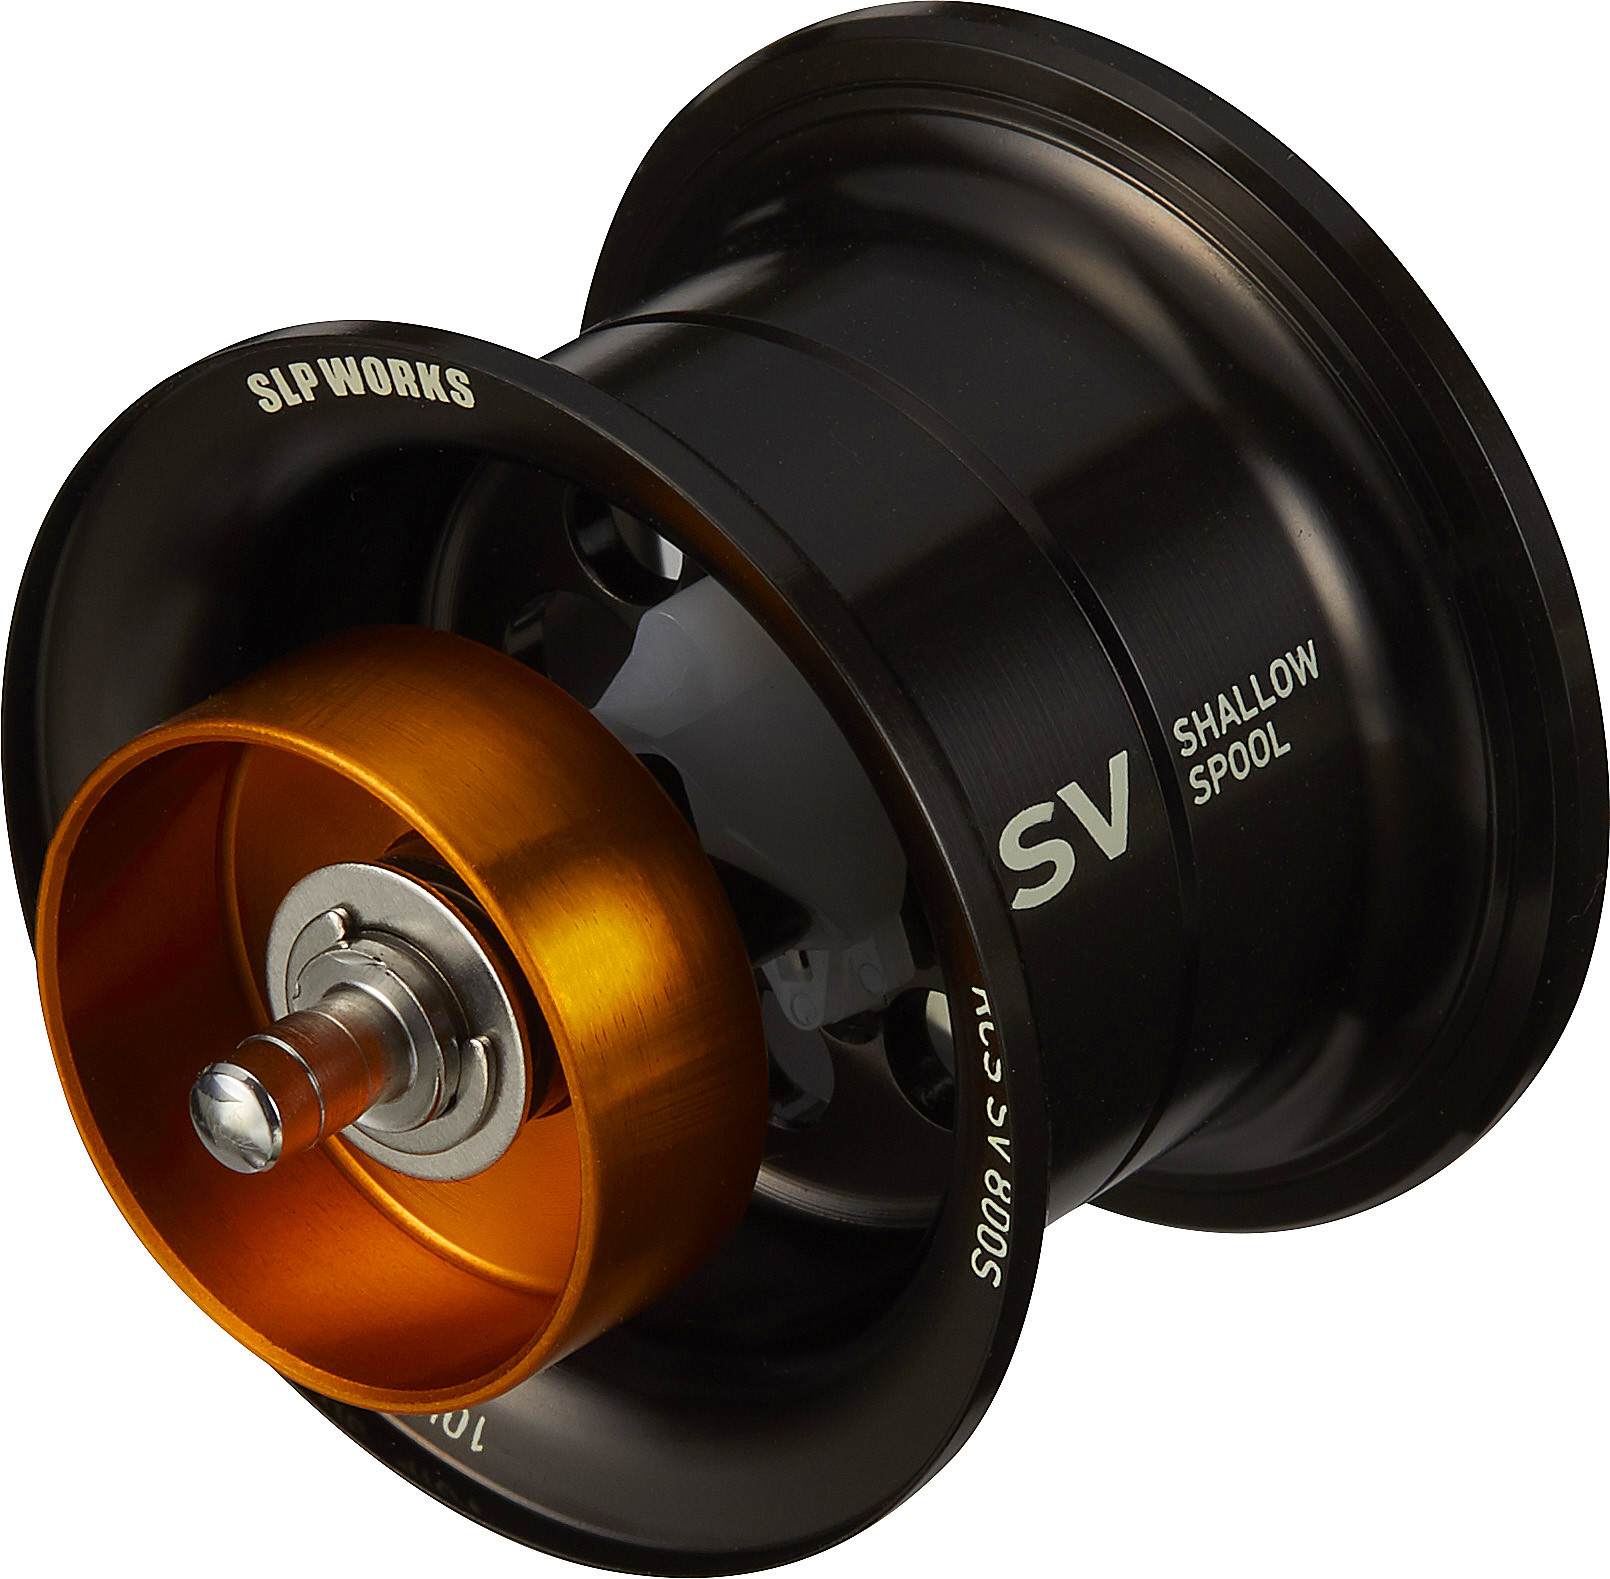 Daiwa SLPW RCSB SV 800S spool, Black, shallow